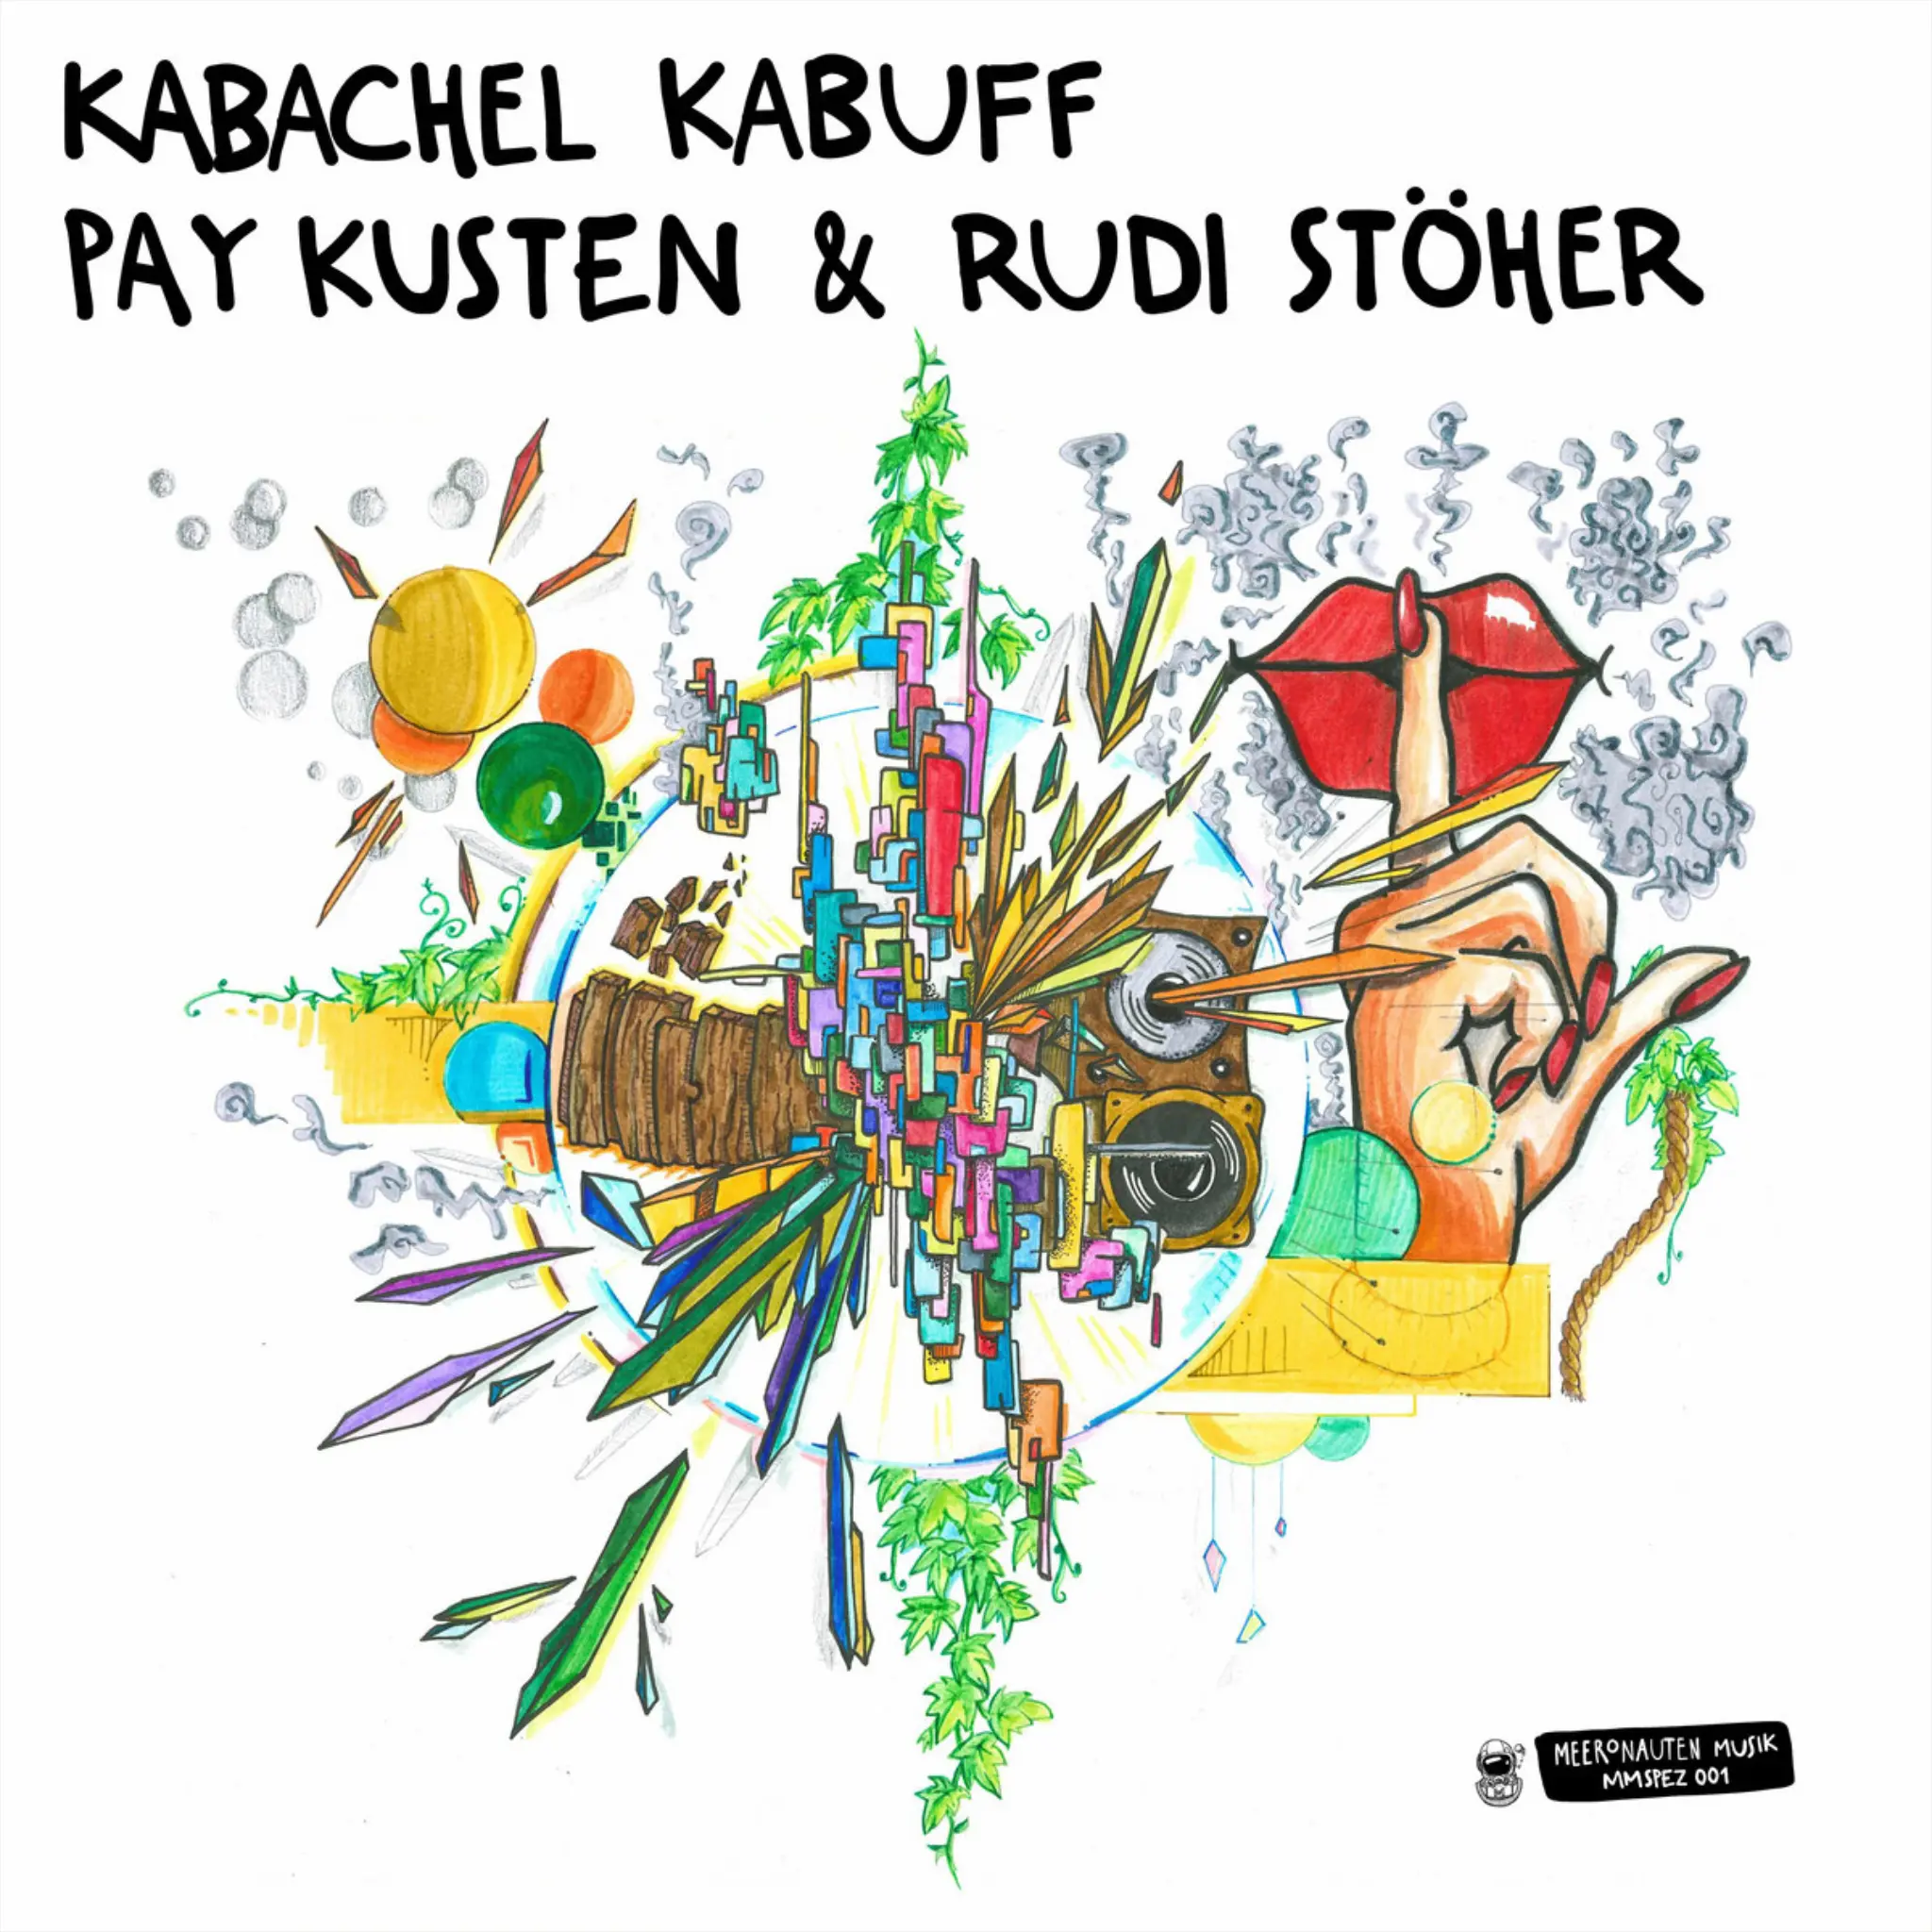 Pay Kusten & Rudi Stöher - Kabachel Kabuff